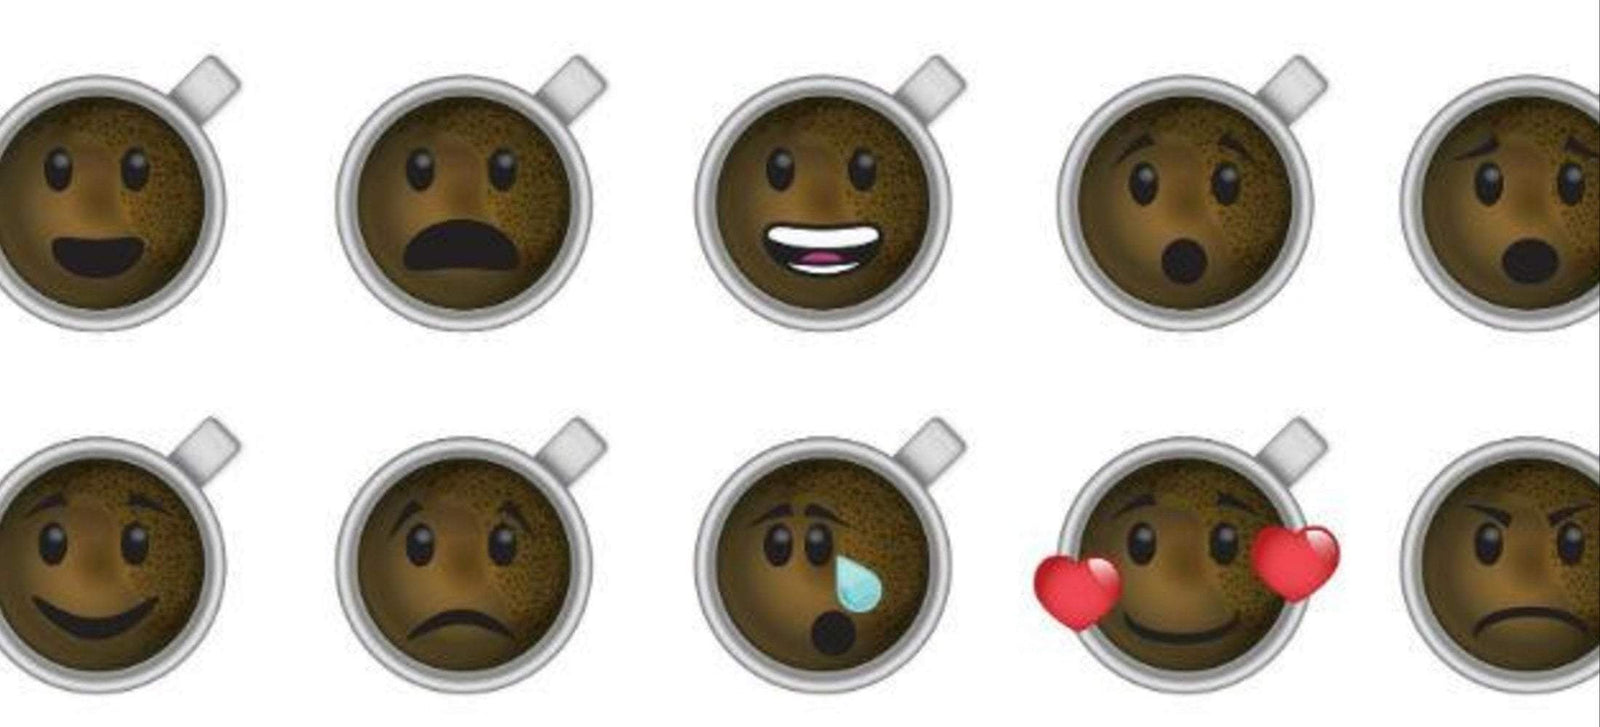 Use the Coffee Emoji to Express Your Java Joy